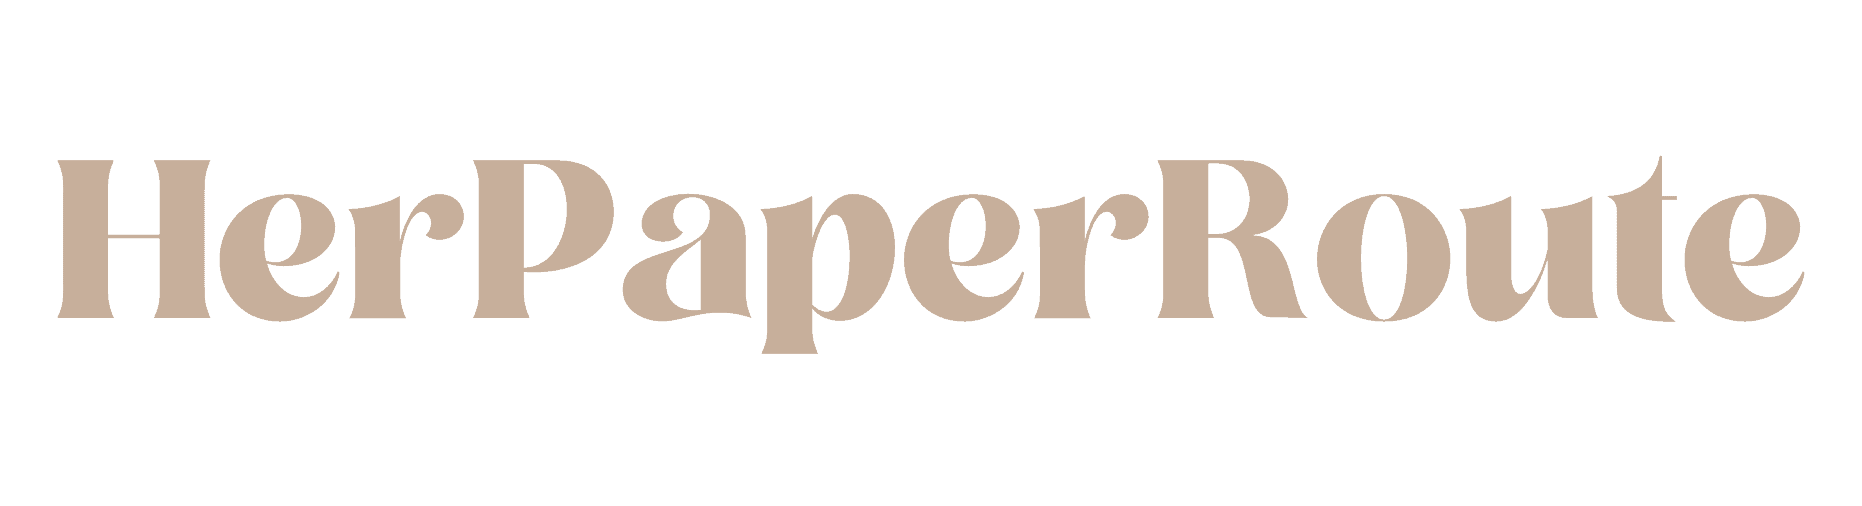 HerPaperRoute logo